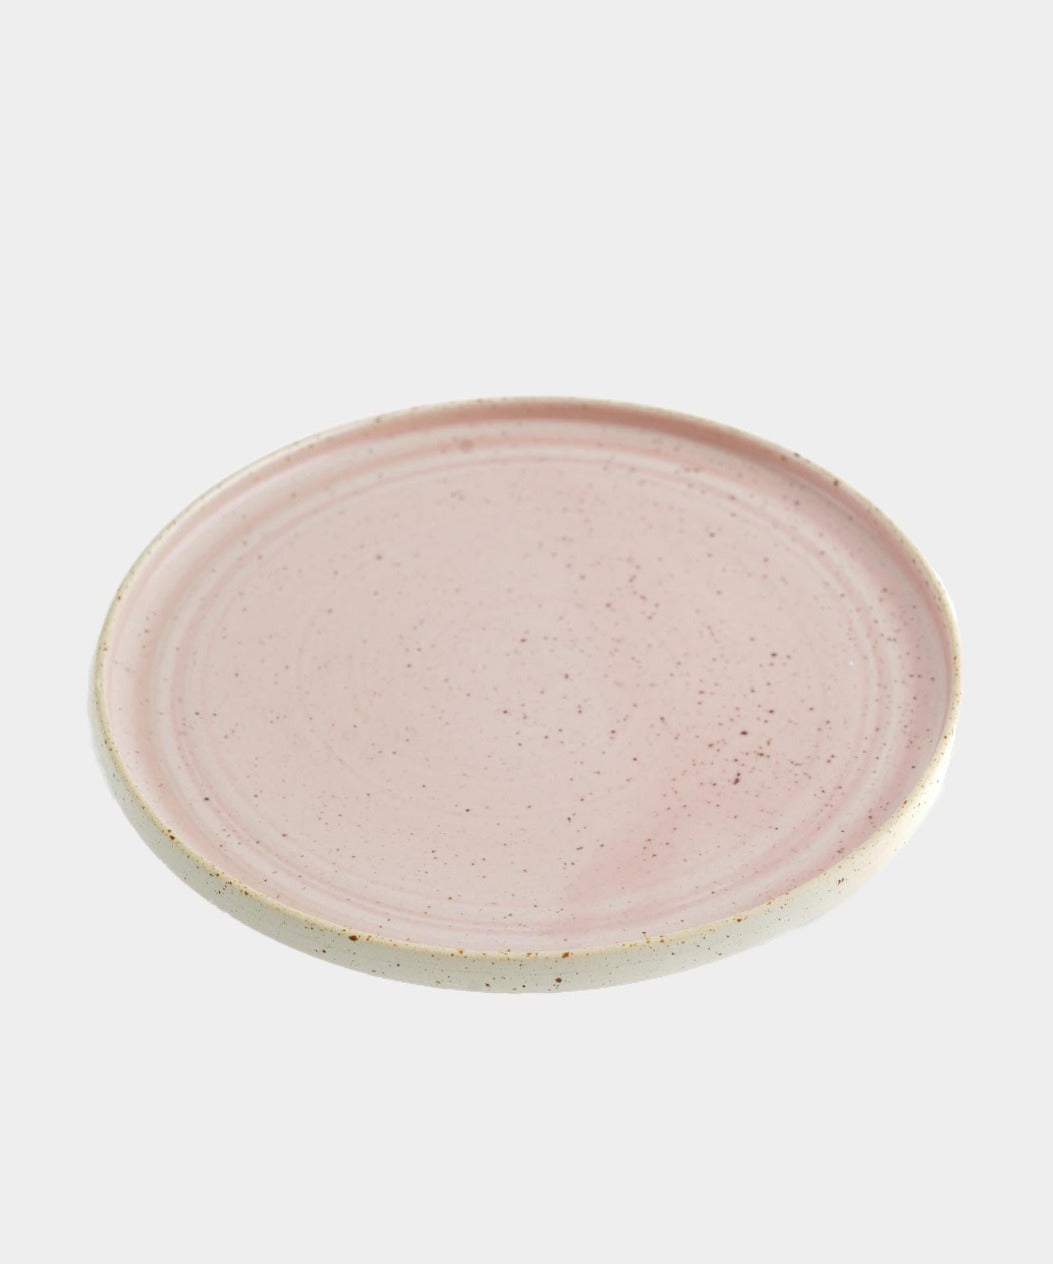 Håndlavet Keramik middagstallerken | FLORAL by Vang | Kerama 2